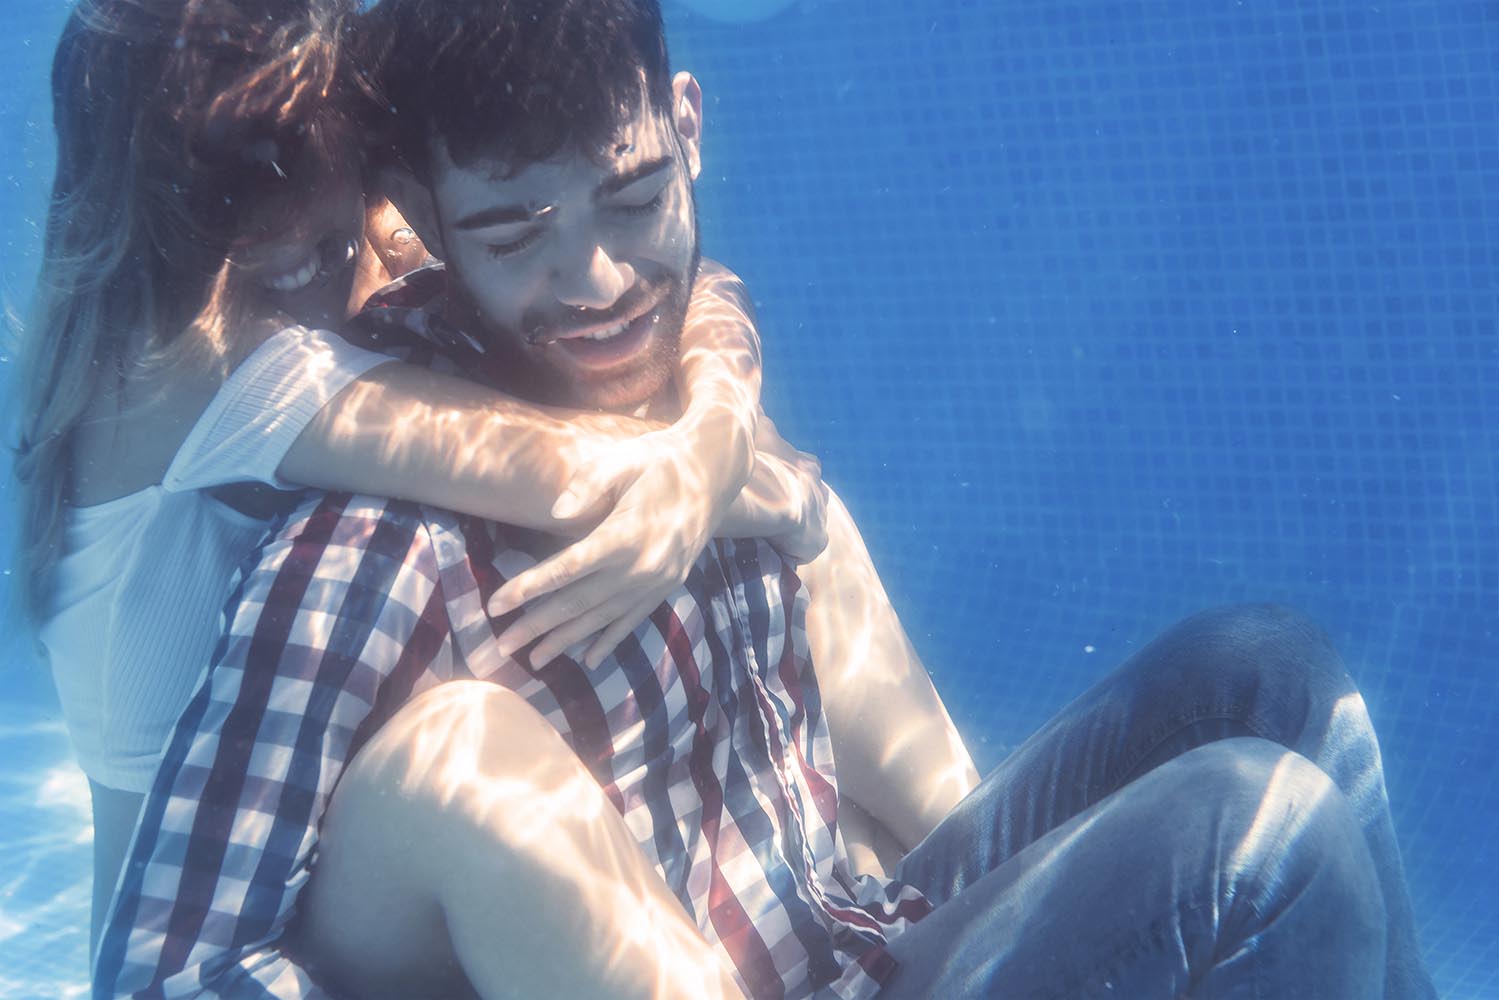 Couple embracing underwater